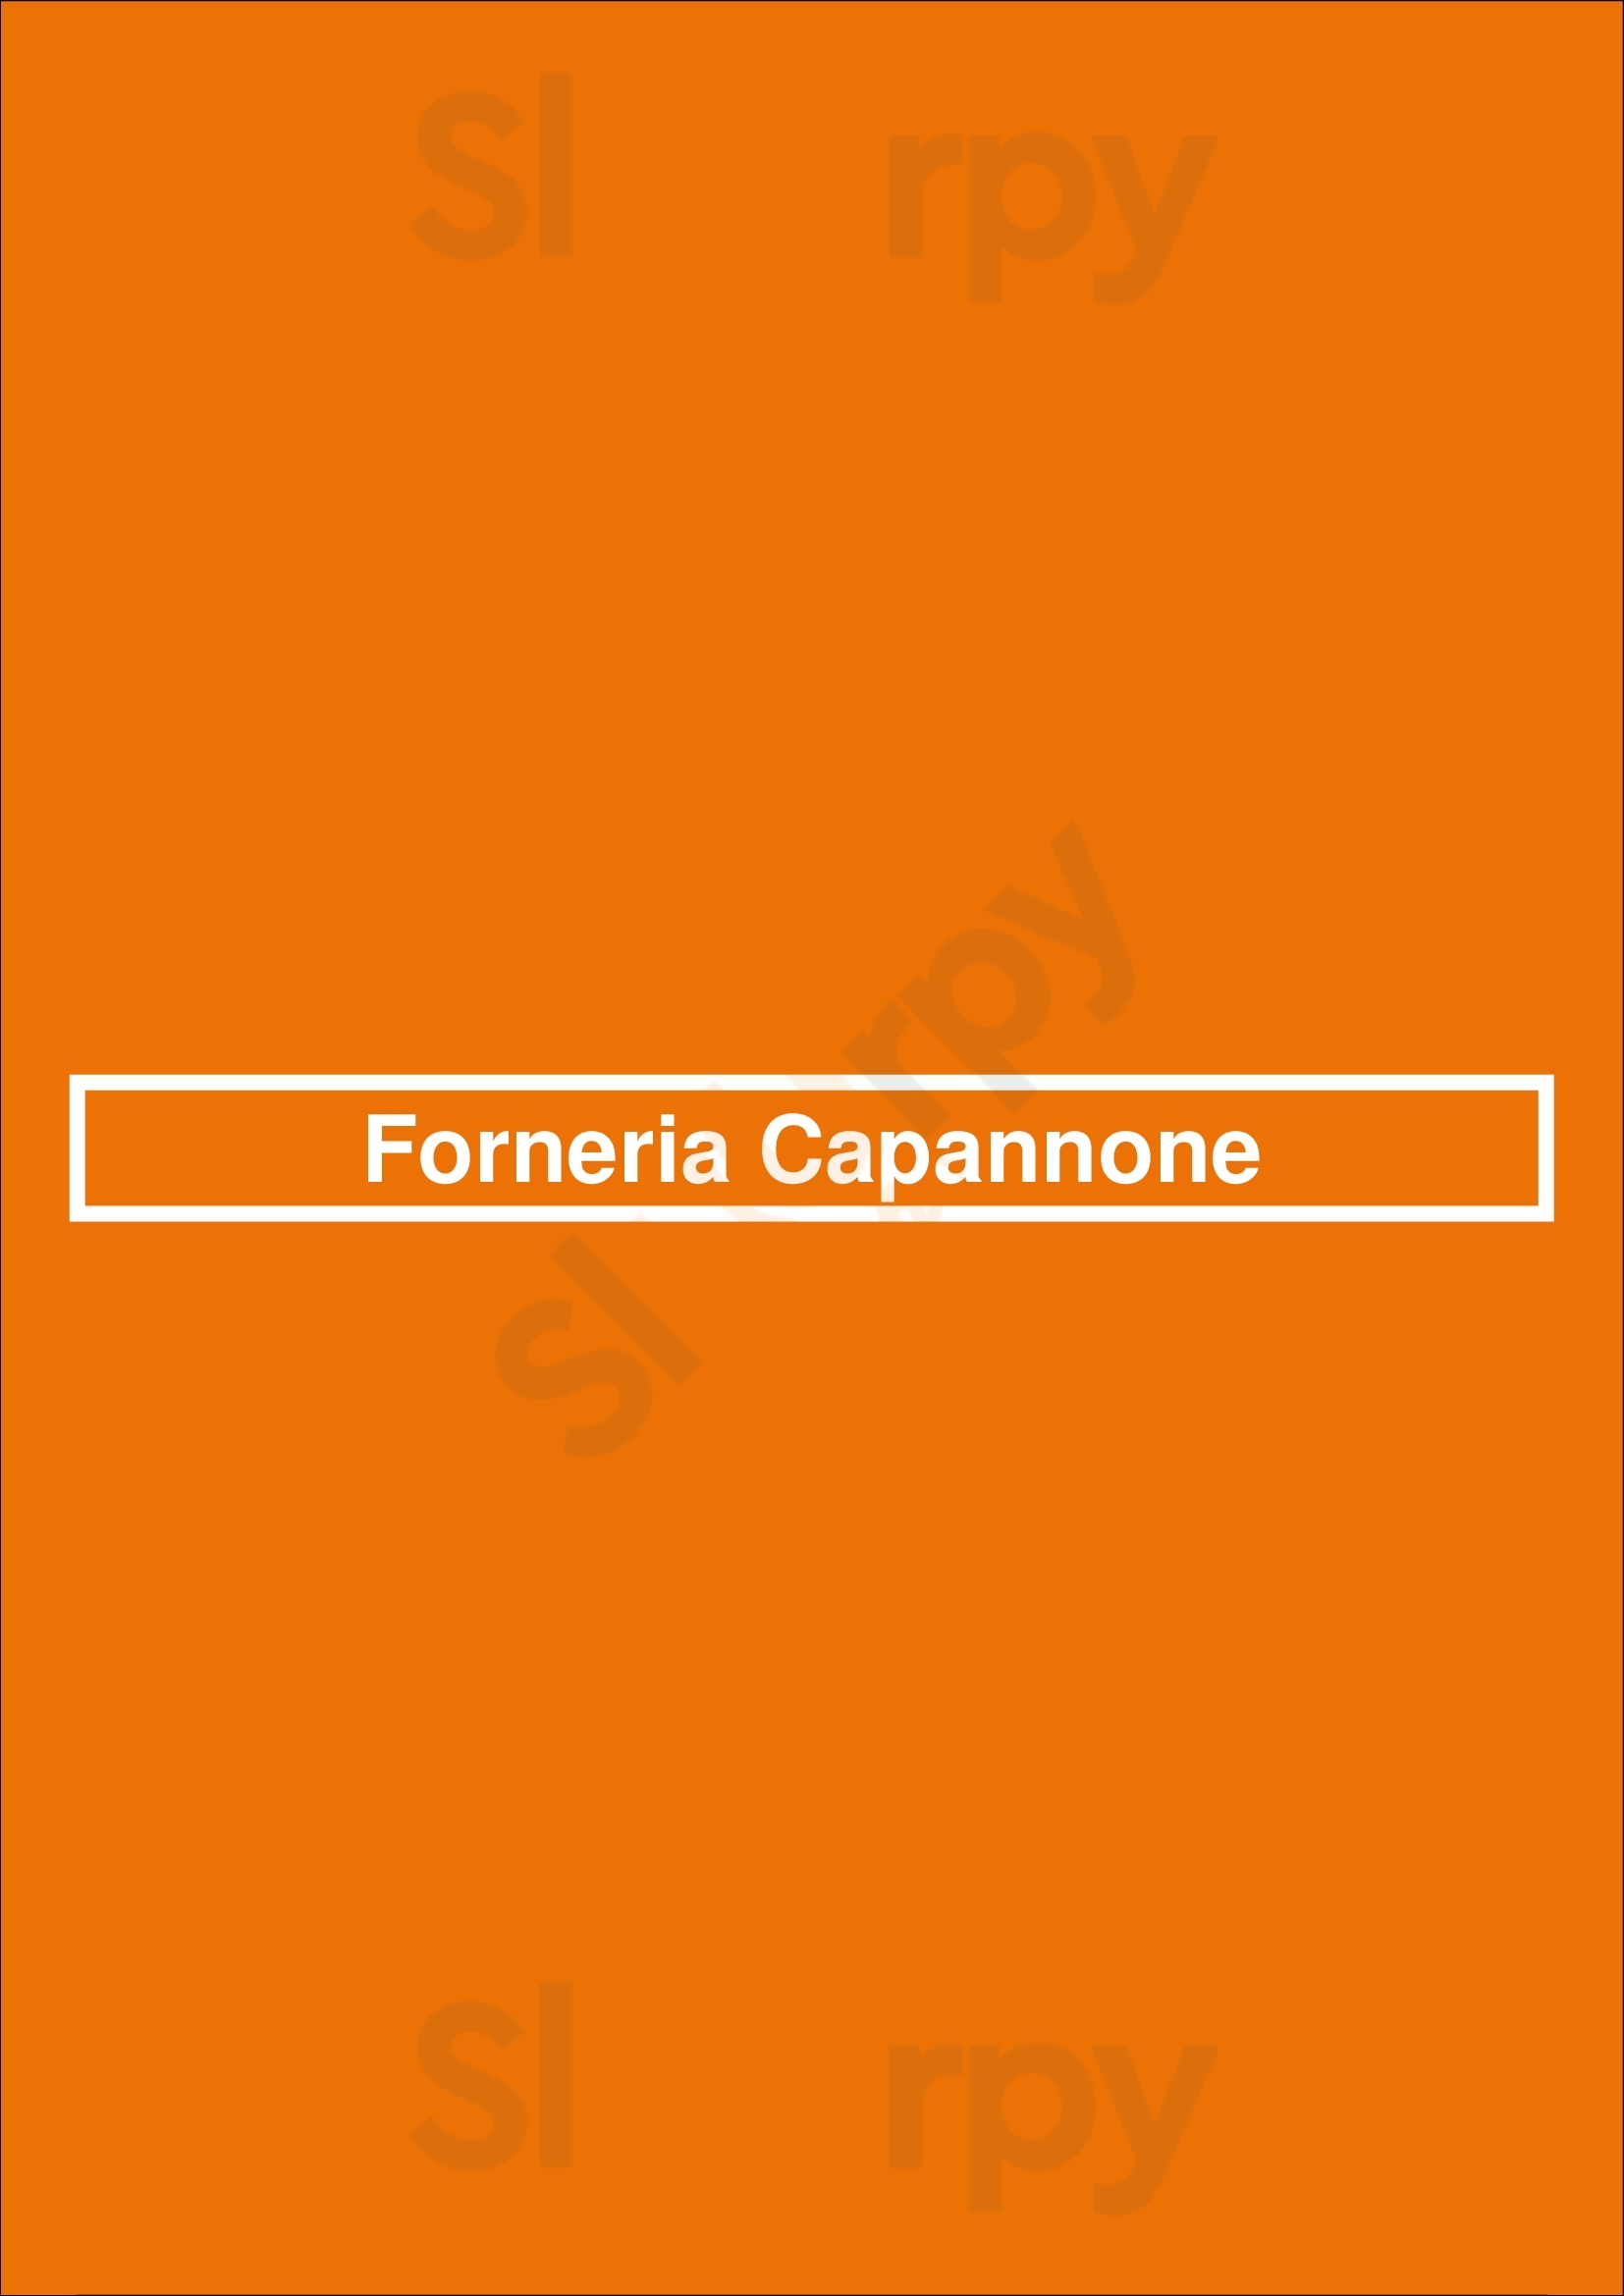 Forneria Capannone Guarulhos Menu - 1